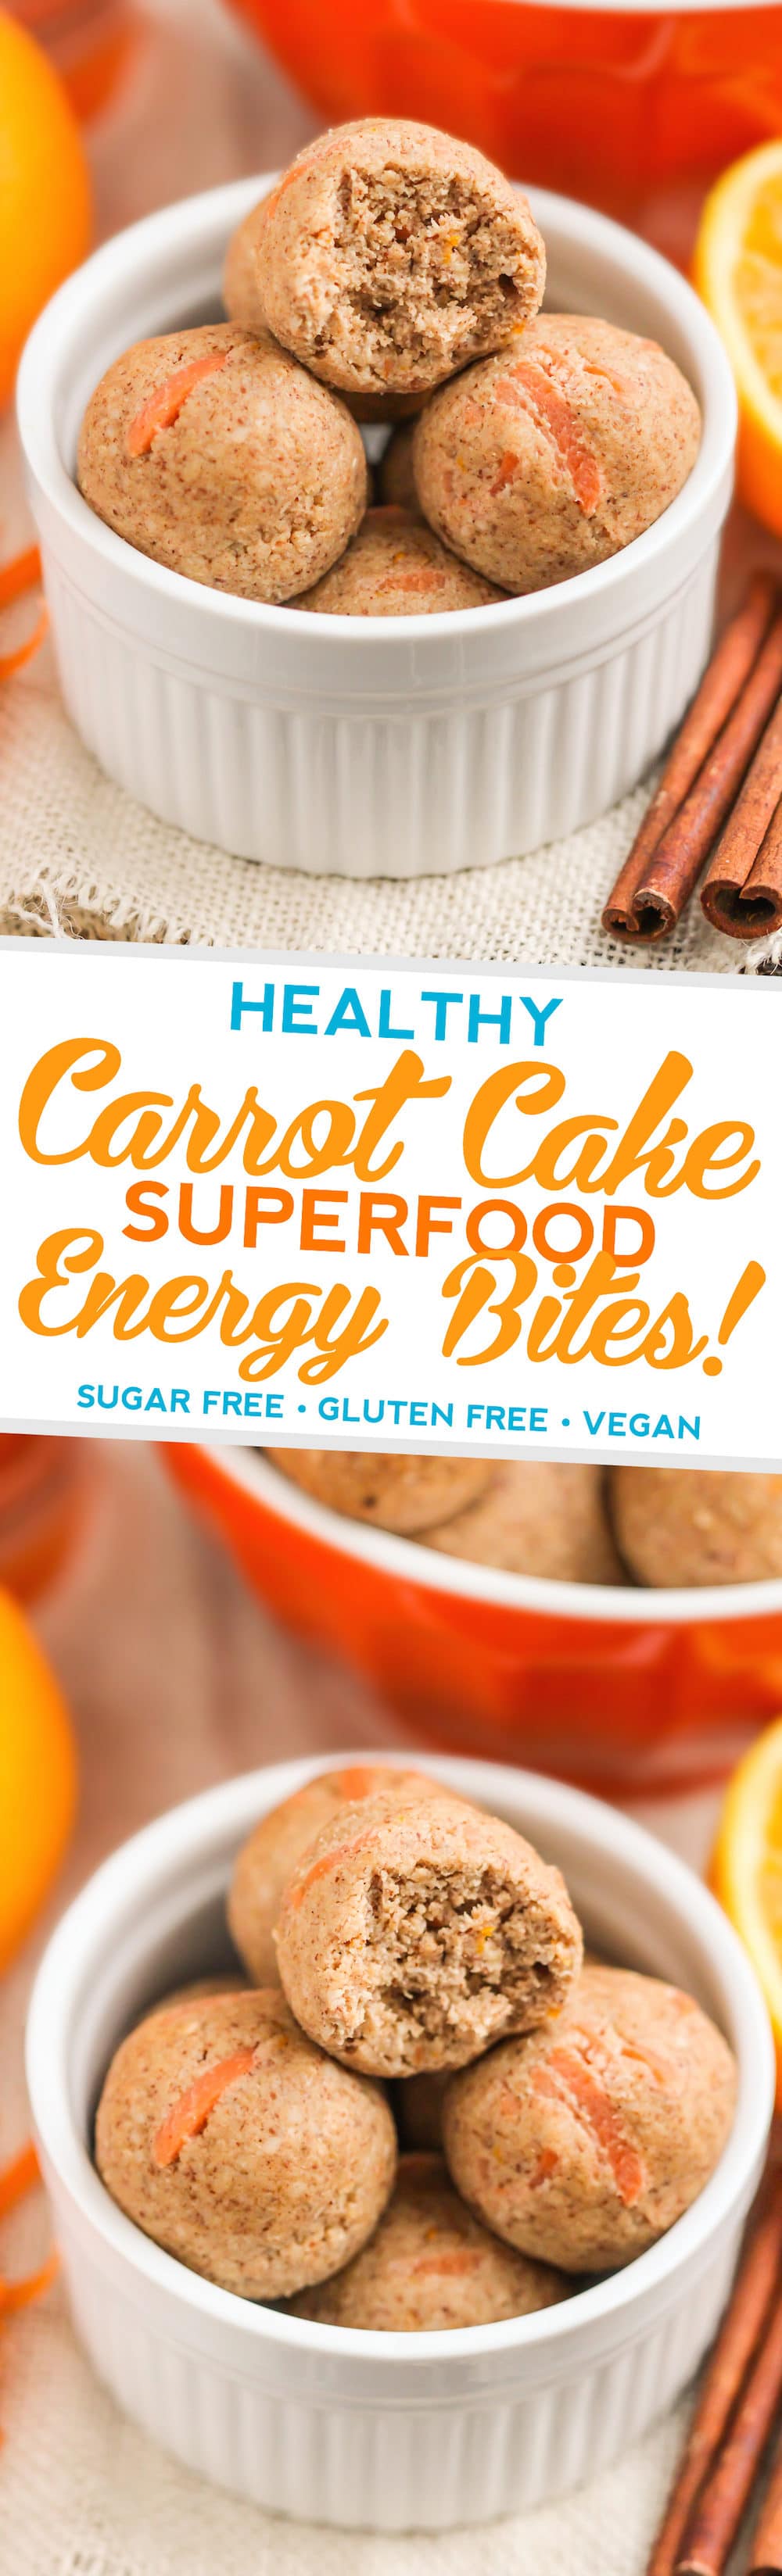 Healthy Carrot Cake Energy Bites (refined sugar free, gluten free, vegan) - Desserts with Benefits